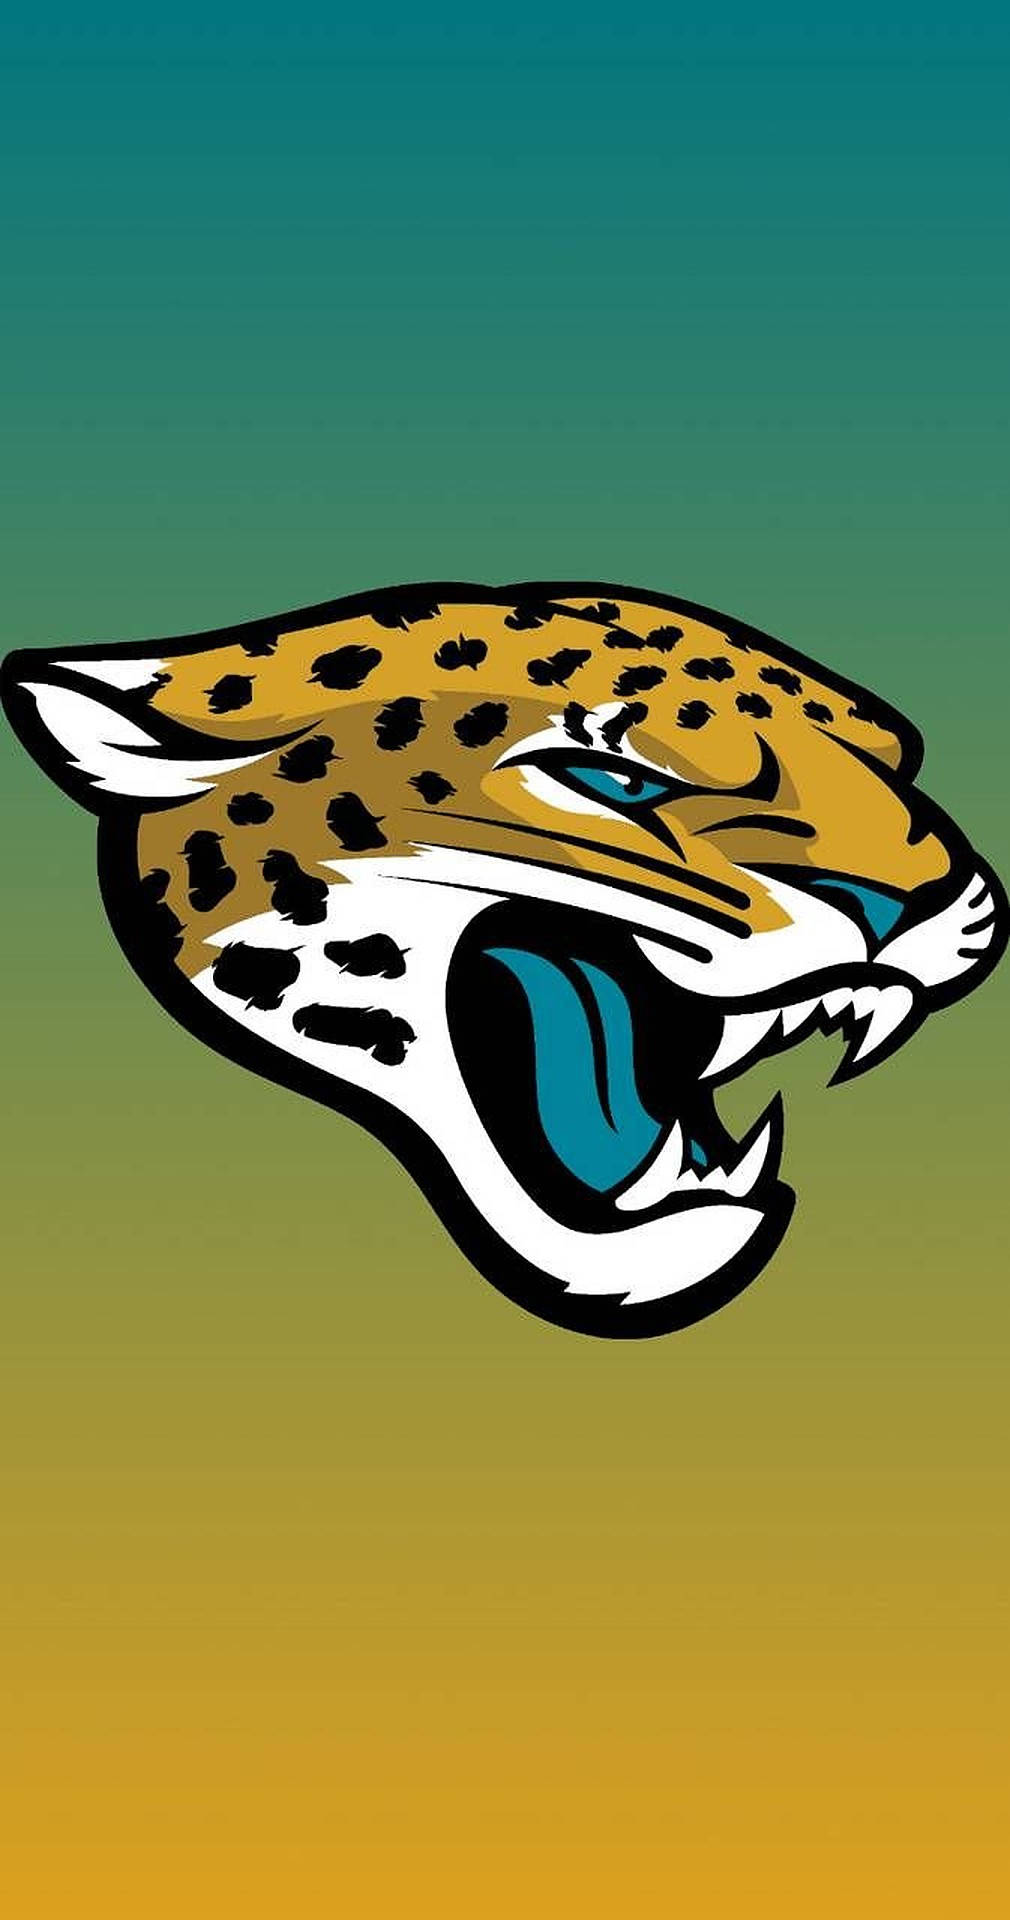 Jacksonville Jaguars Emblem Gradient Background